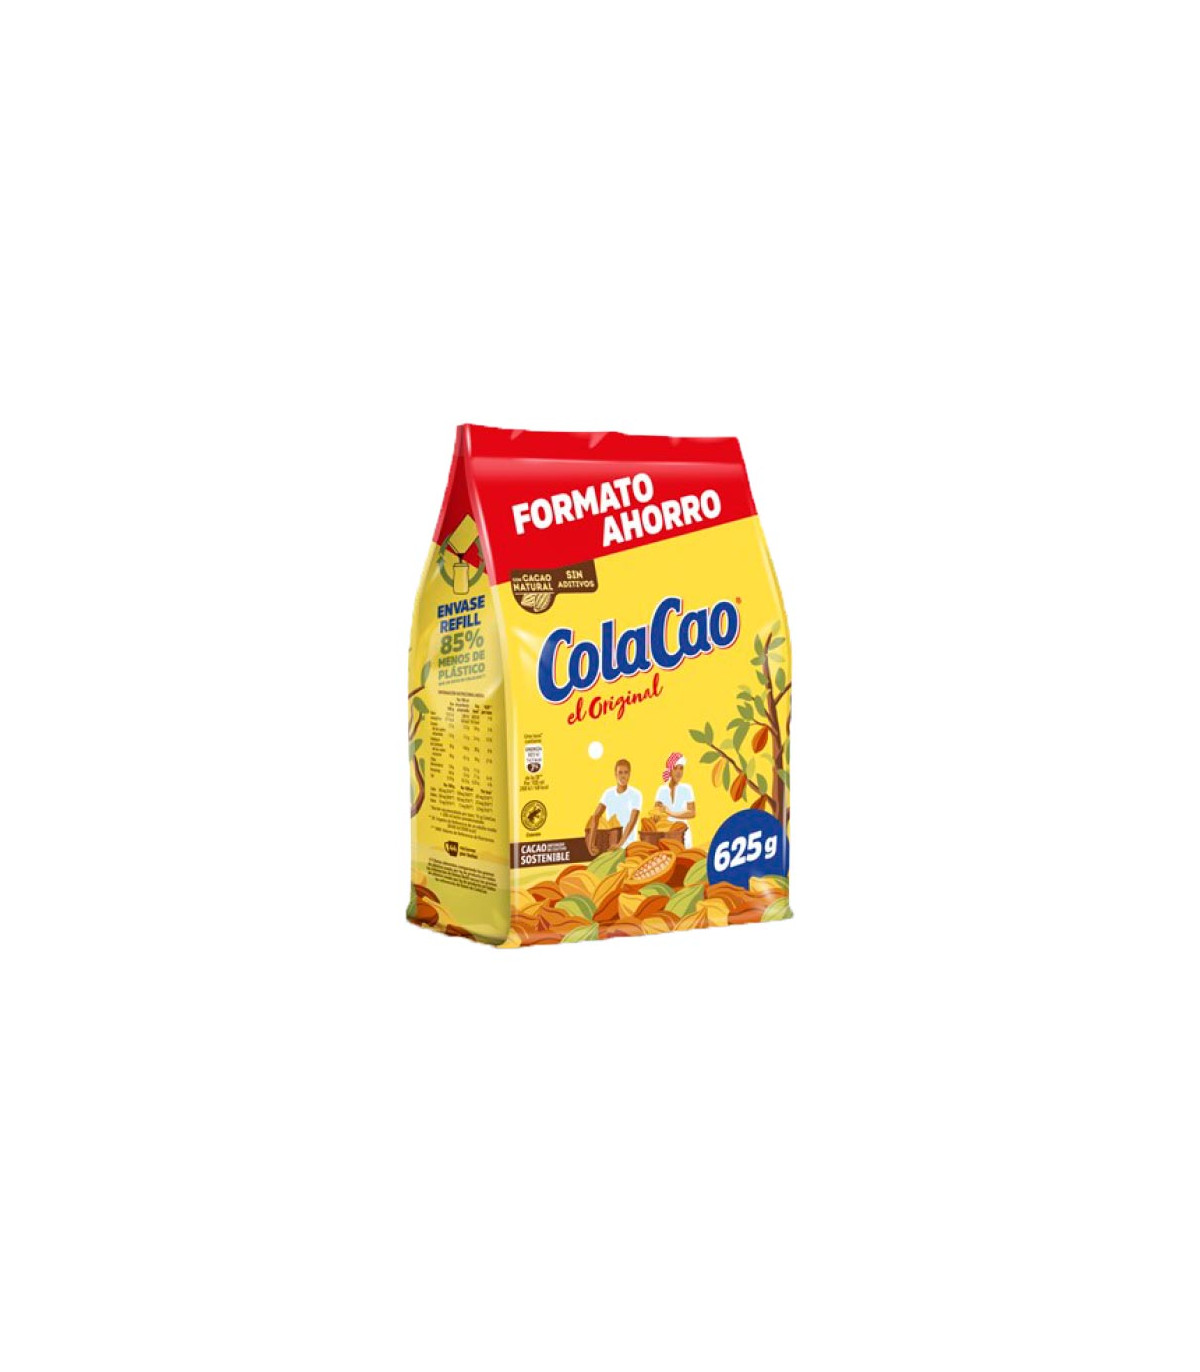 Cola Cao Original, Comprar Online